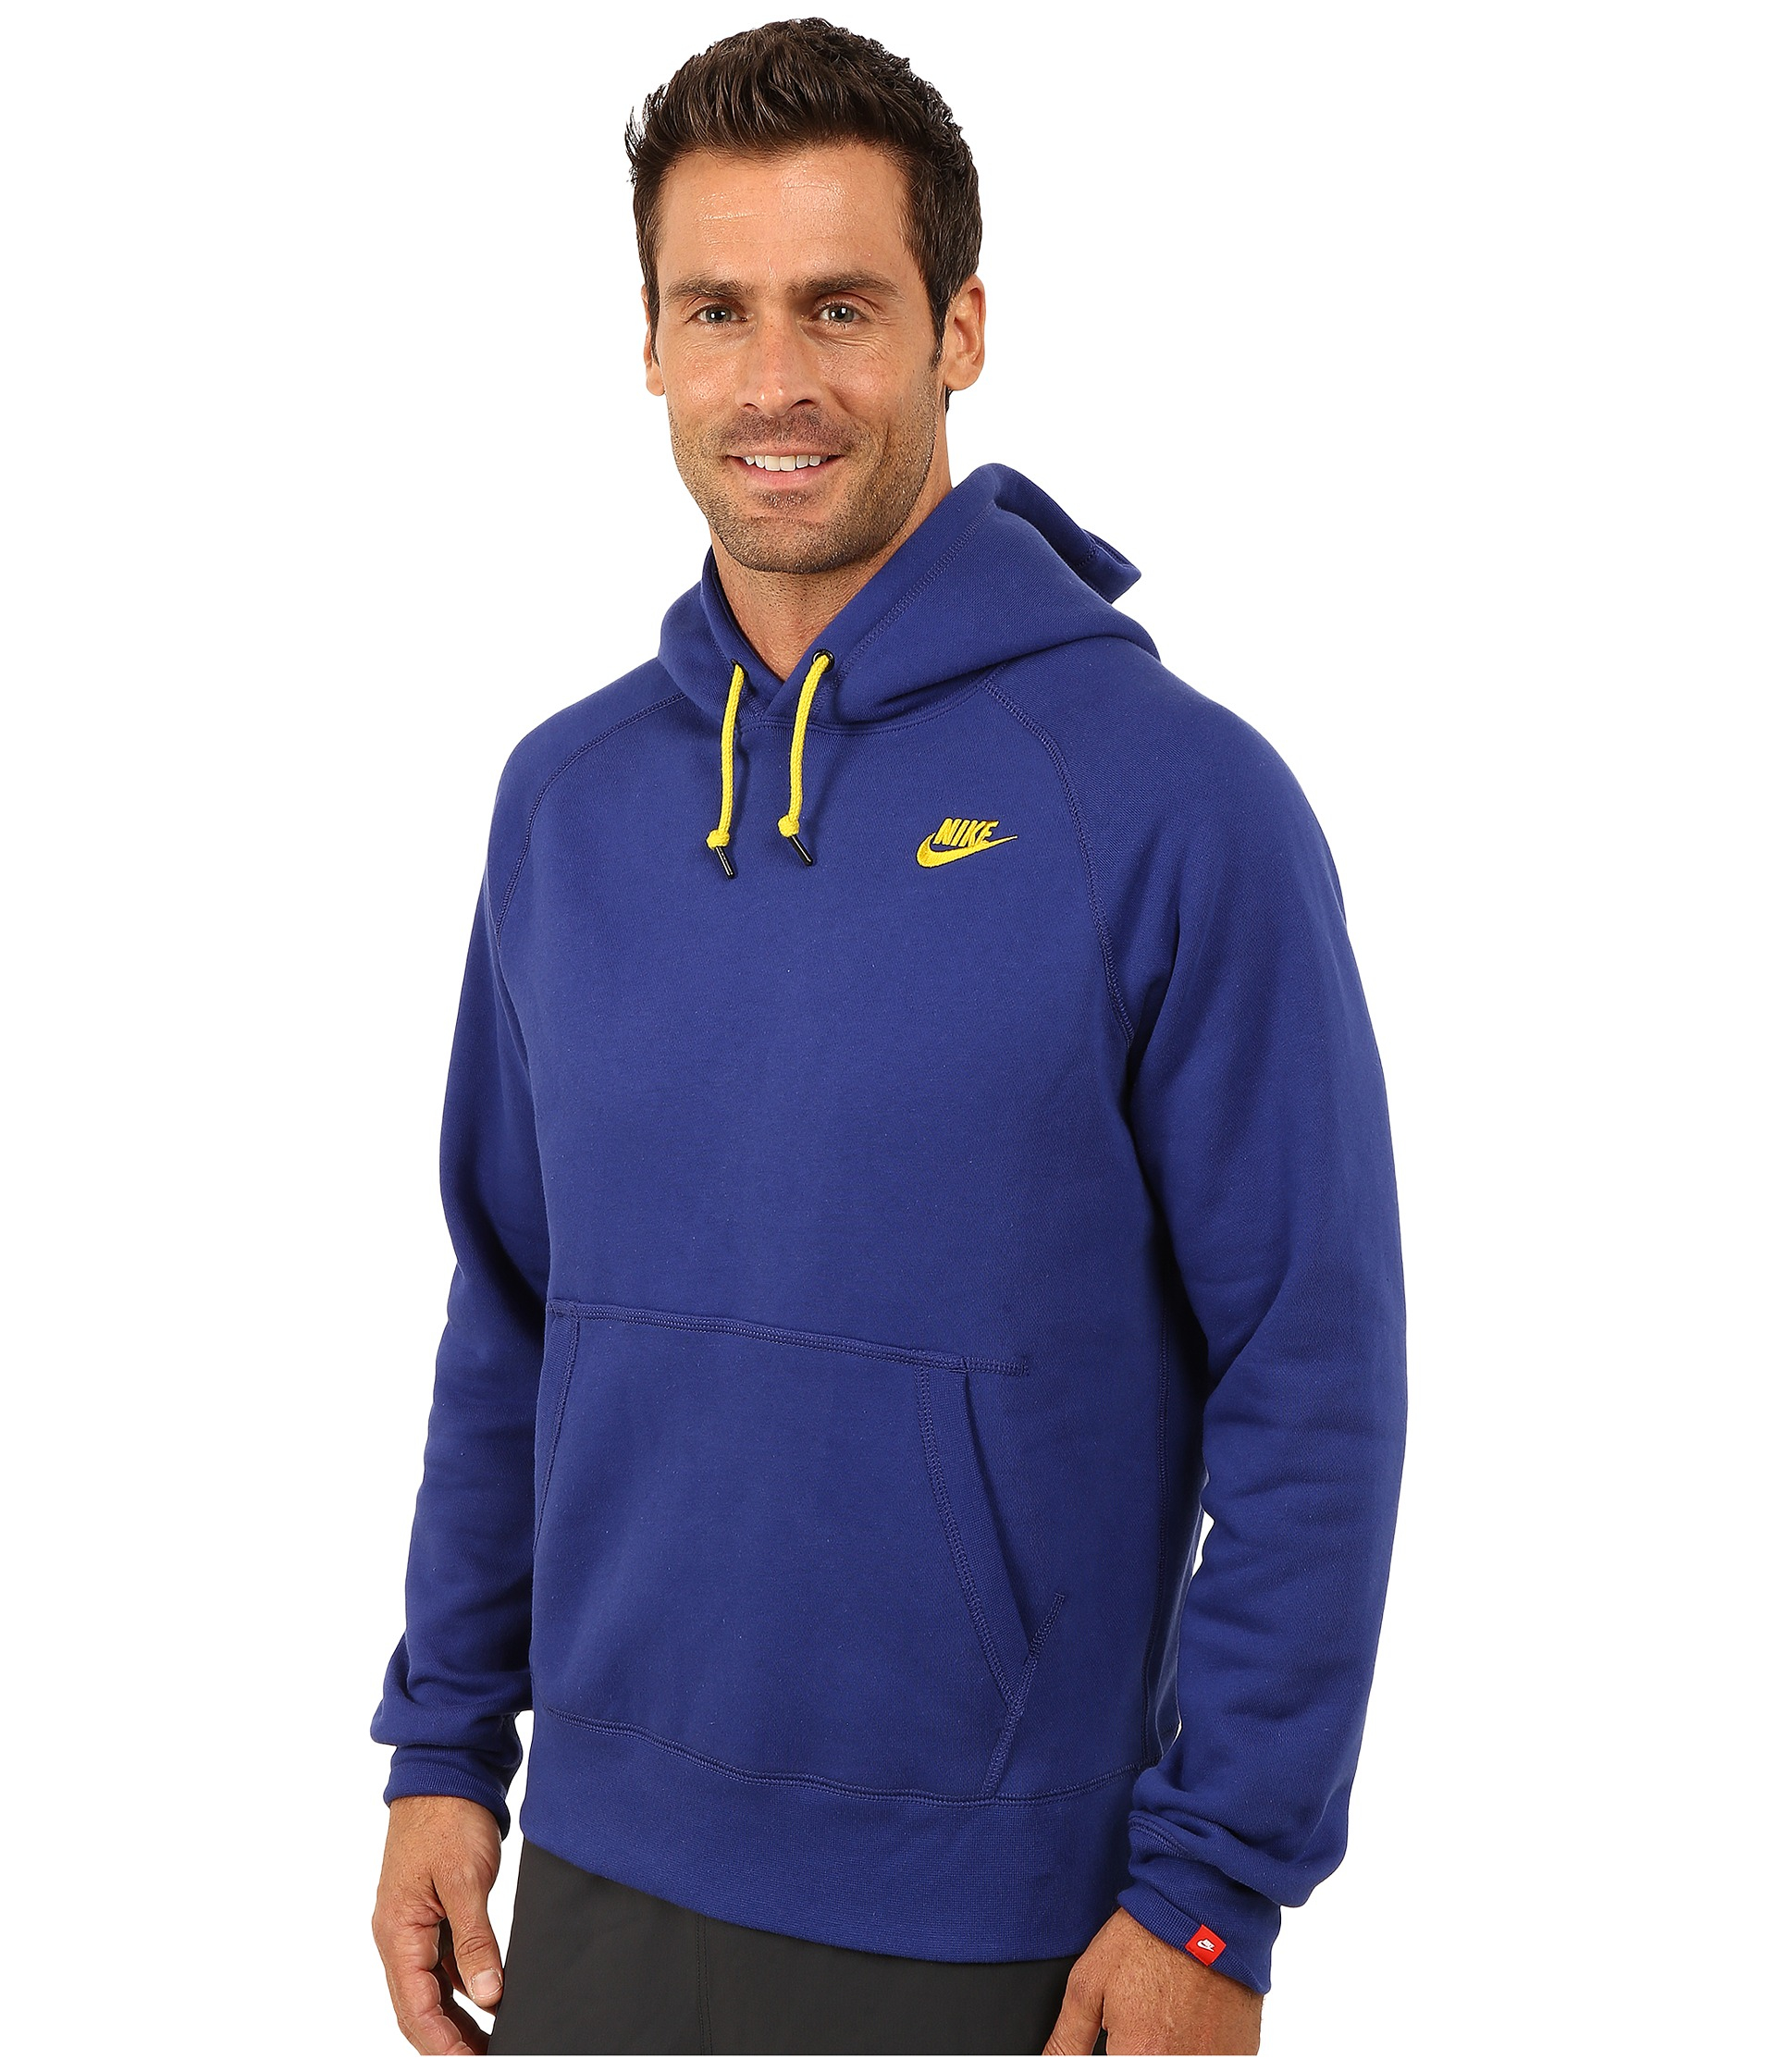 Nike Aw77 Fleece Pullover Hoodie in Blue for Men - Lyst